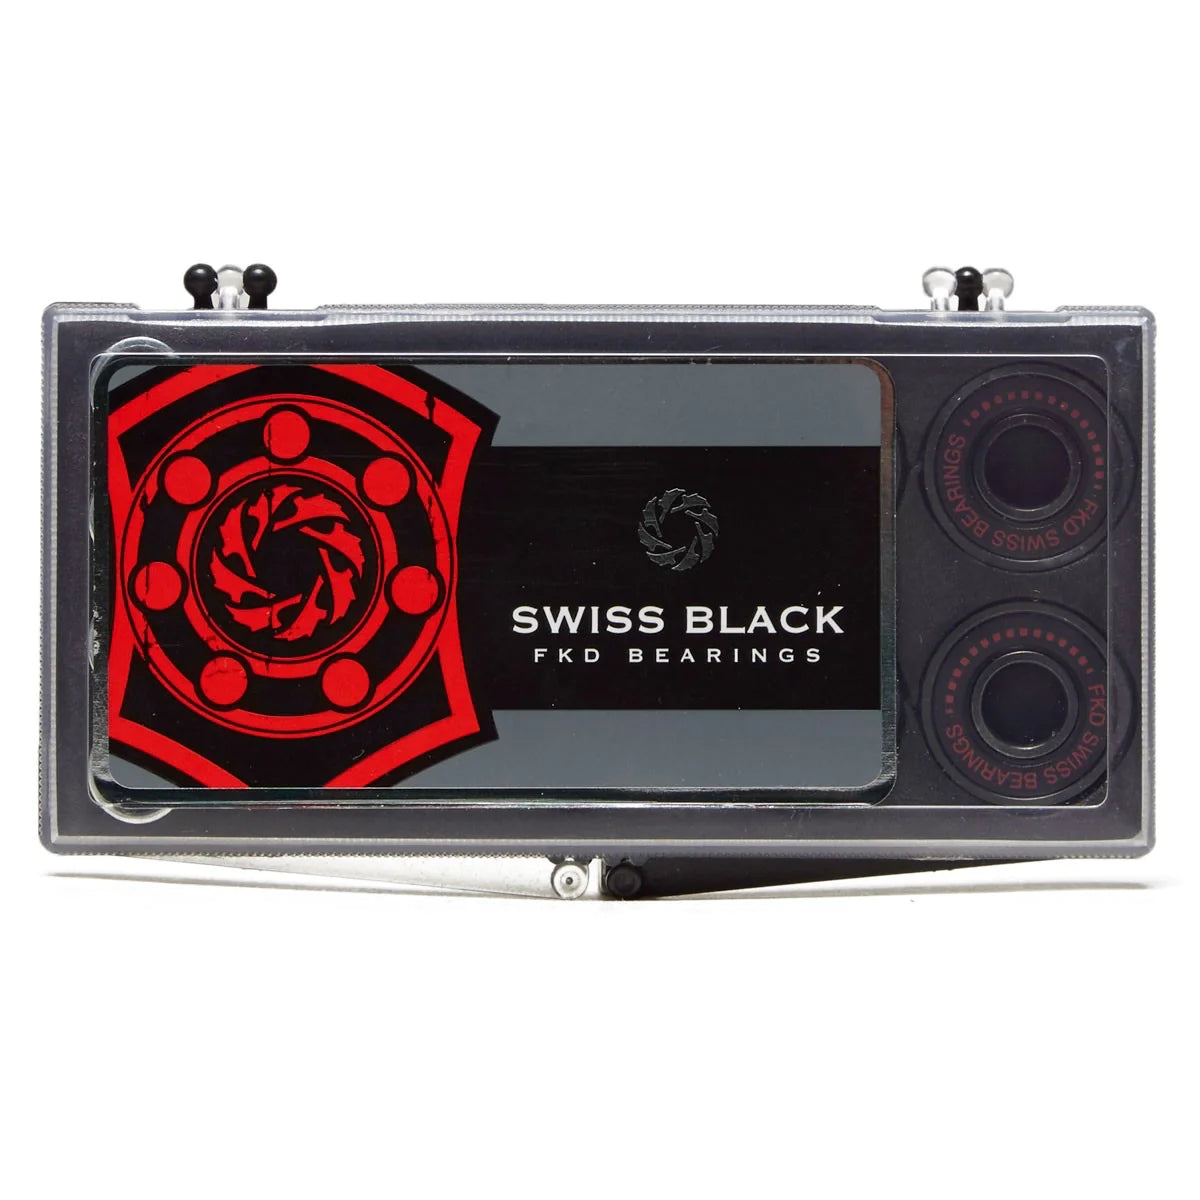 FKD Swiss Black Bearings (8 Pack)